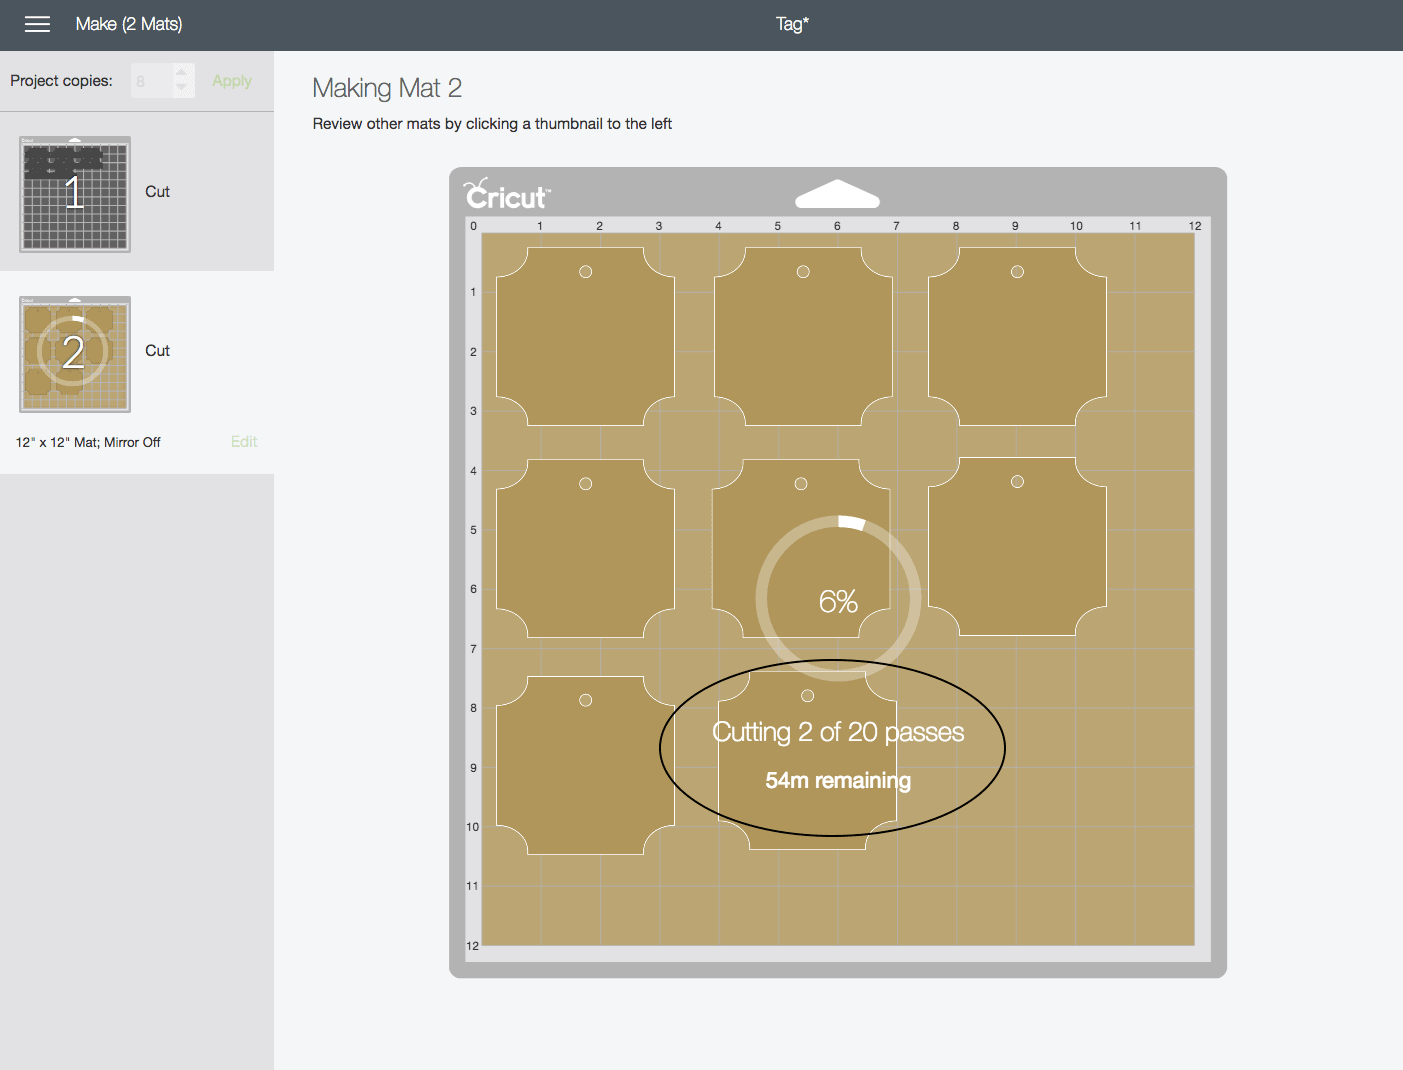 Cricut Design Space Screenshot for cutting chipboard on a Cricut Maker